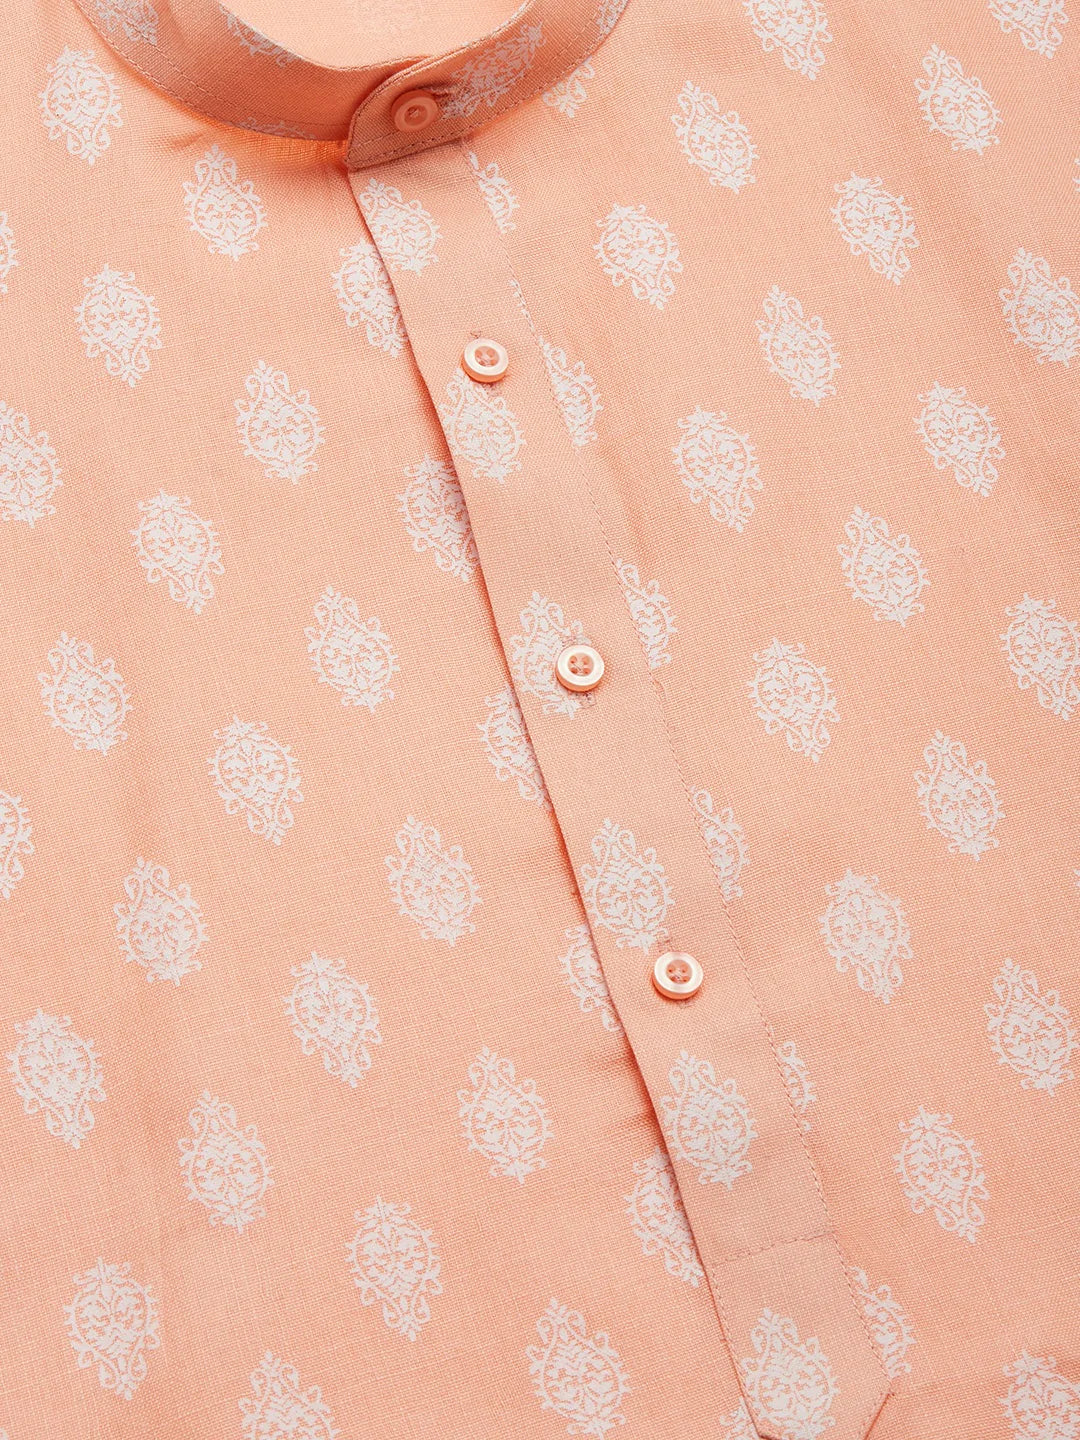 Jompers Men's Peach Cotton Floral printed kurta Pyjama Set ( JOKP 650 Peach )